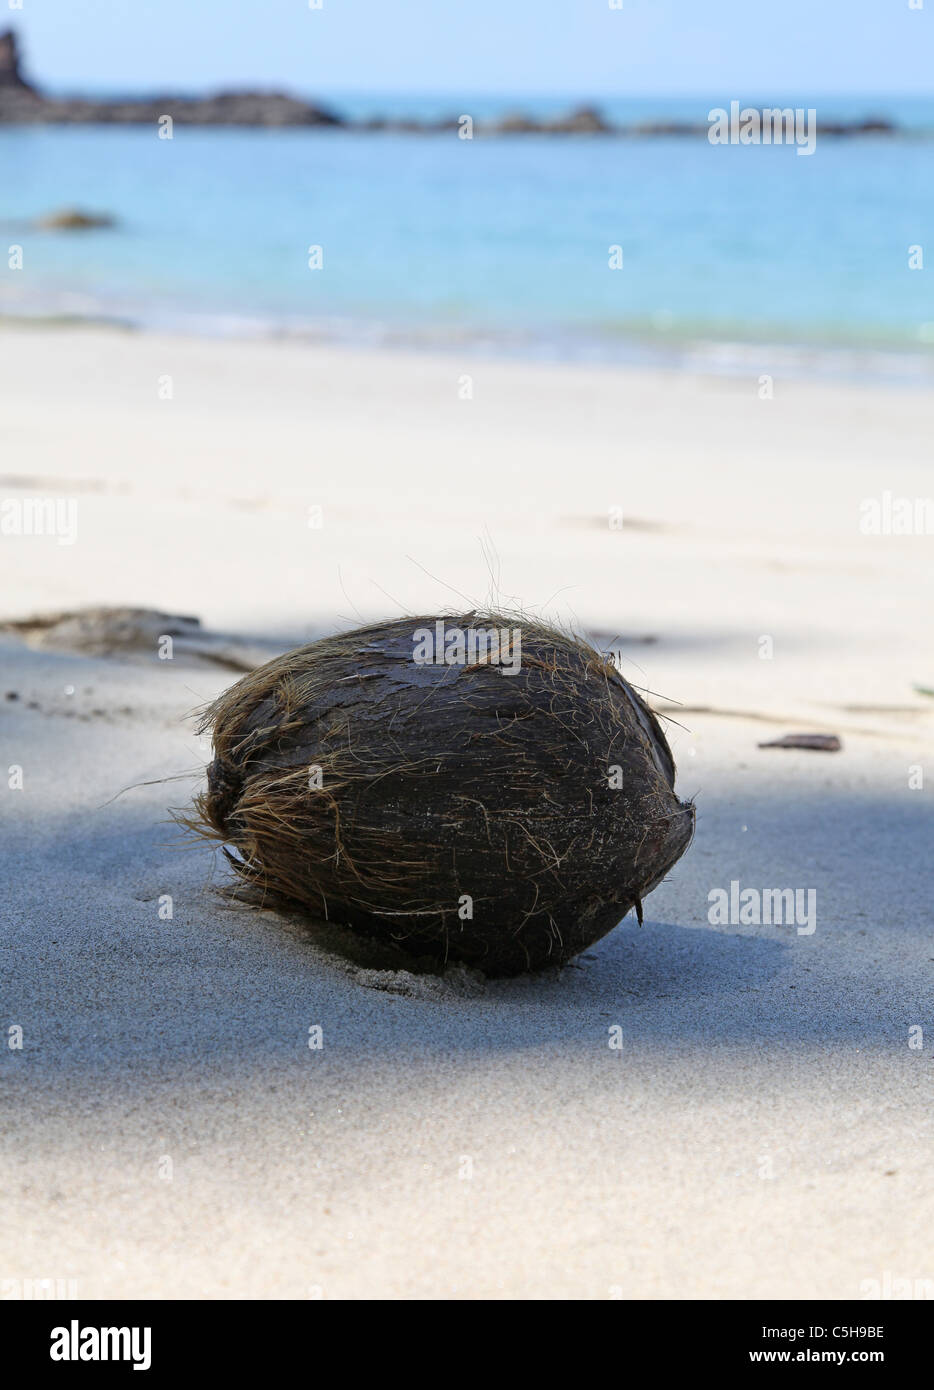 Eine Kokosnuss am Strand Playa Puerto Escondido auch bekannt als Playa Cuatro Manuel Antonio Nationalpark Costa Rica Mittelamerika Stockfoto